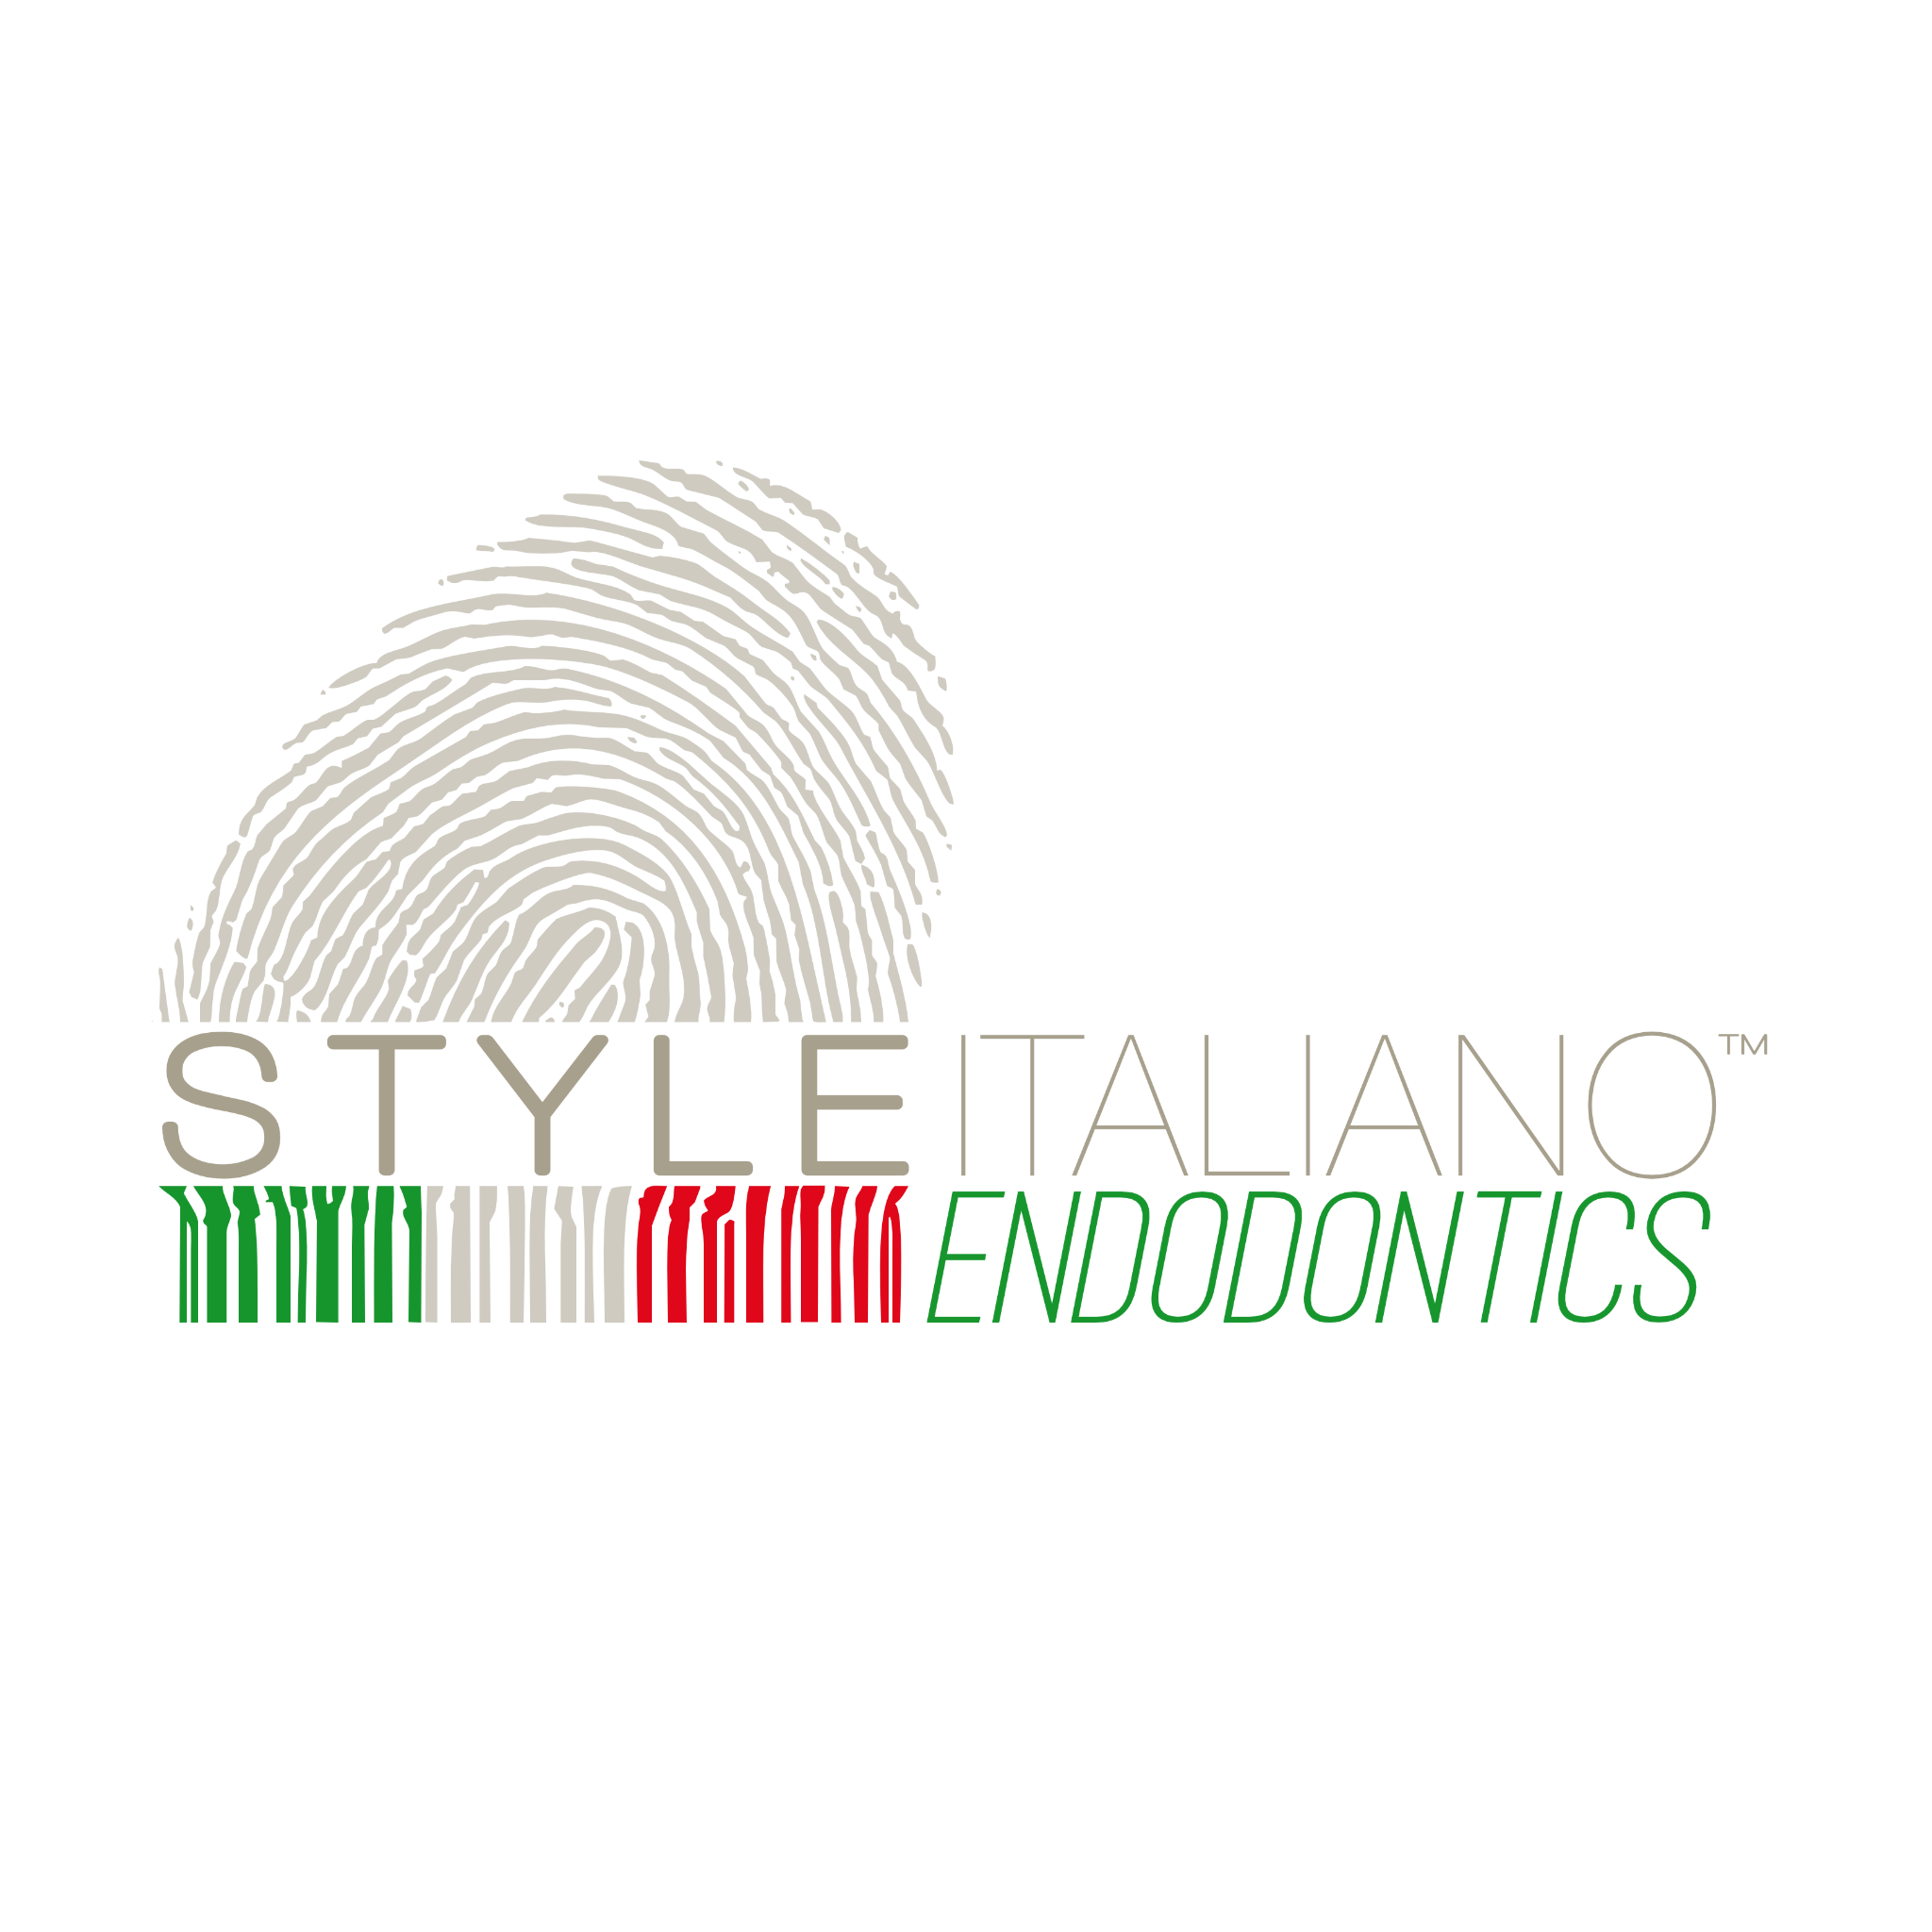 Style Italiano Endodontics Community